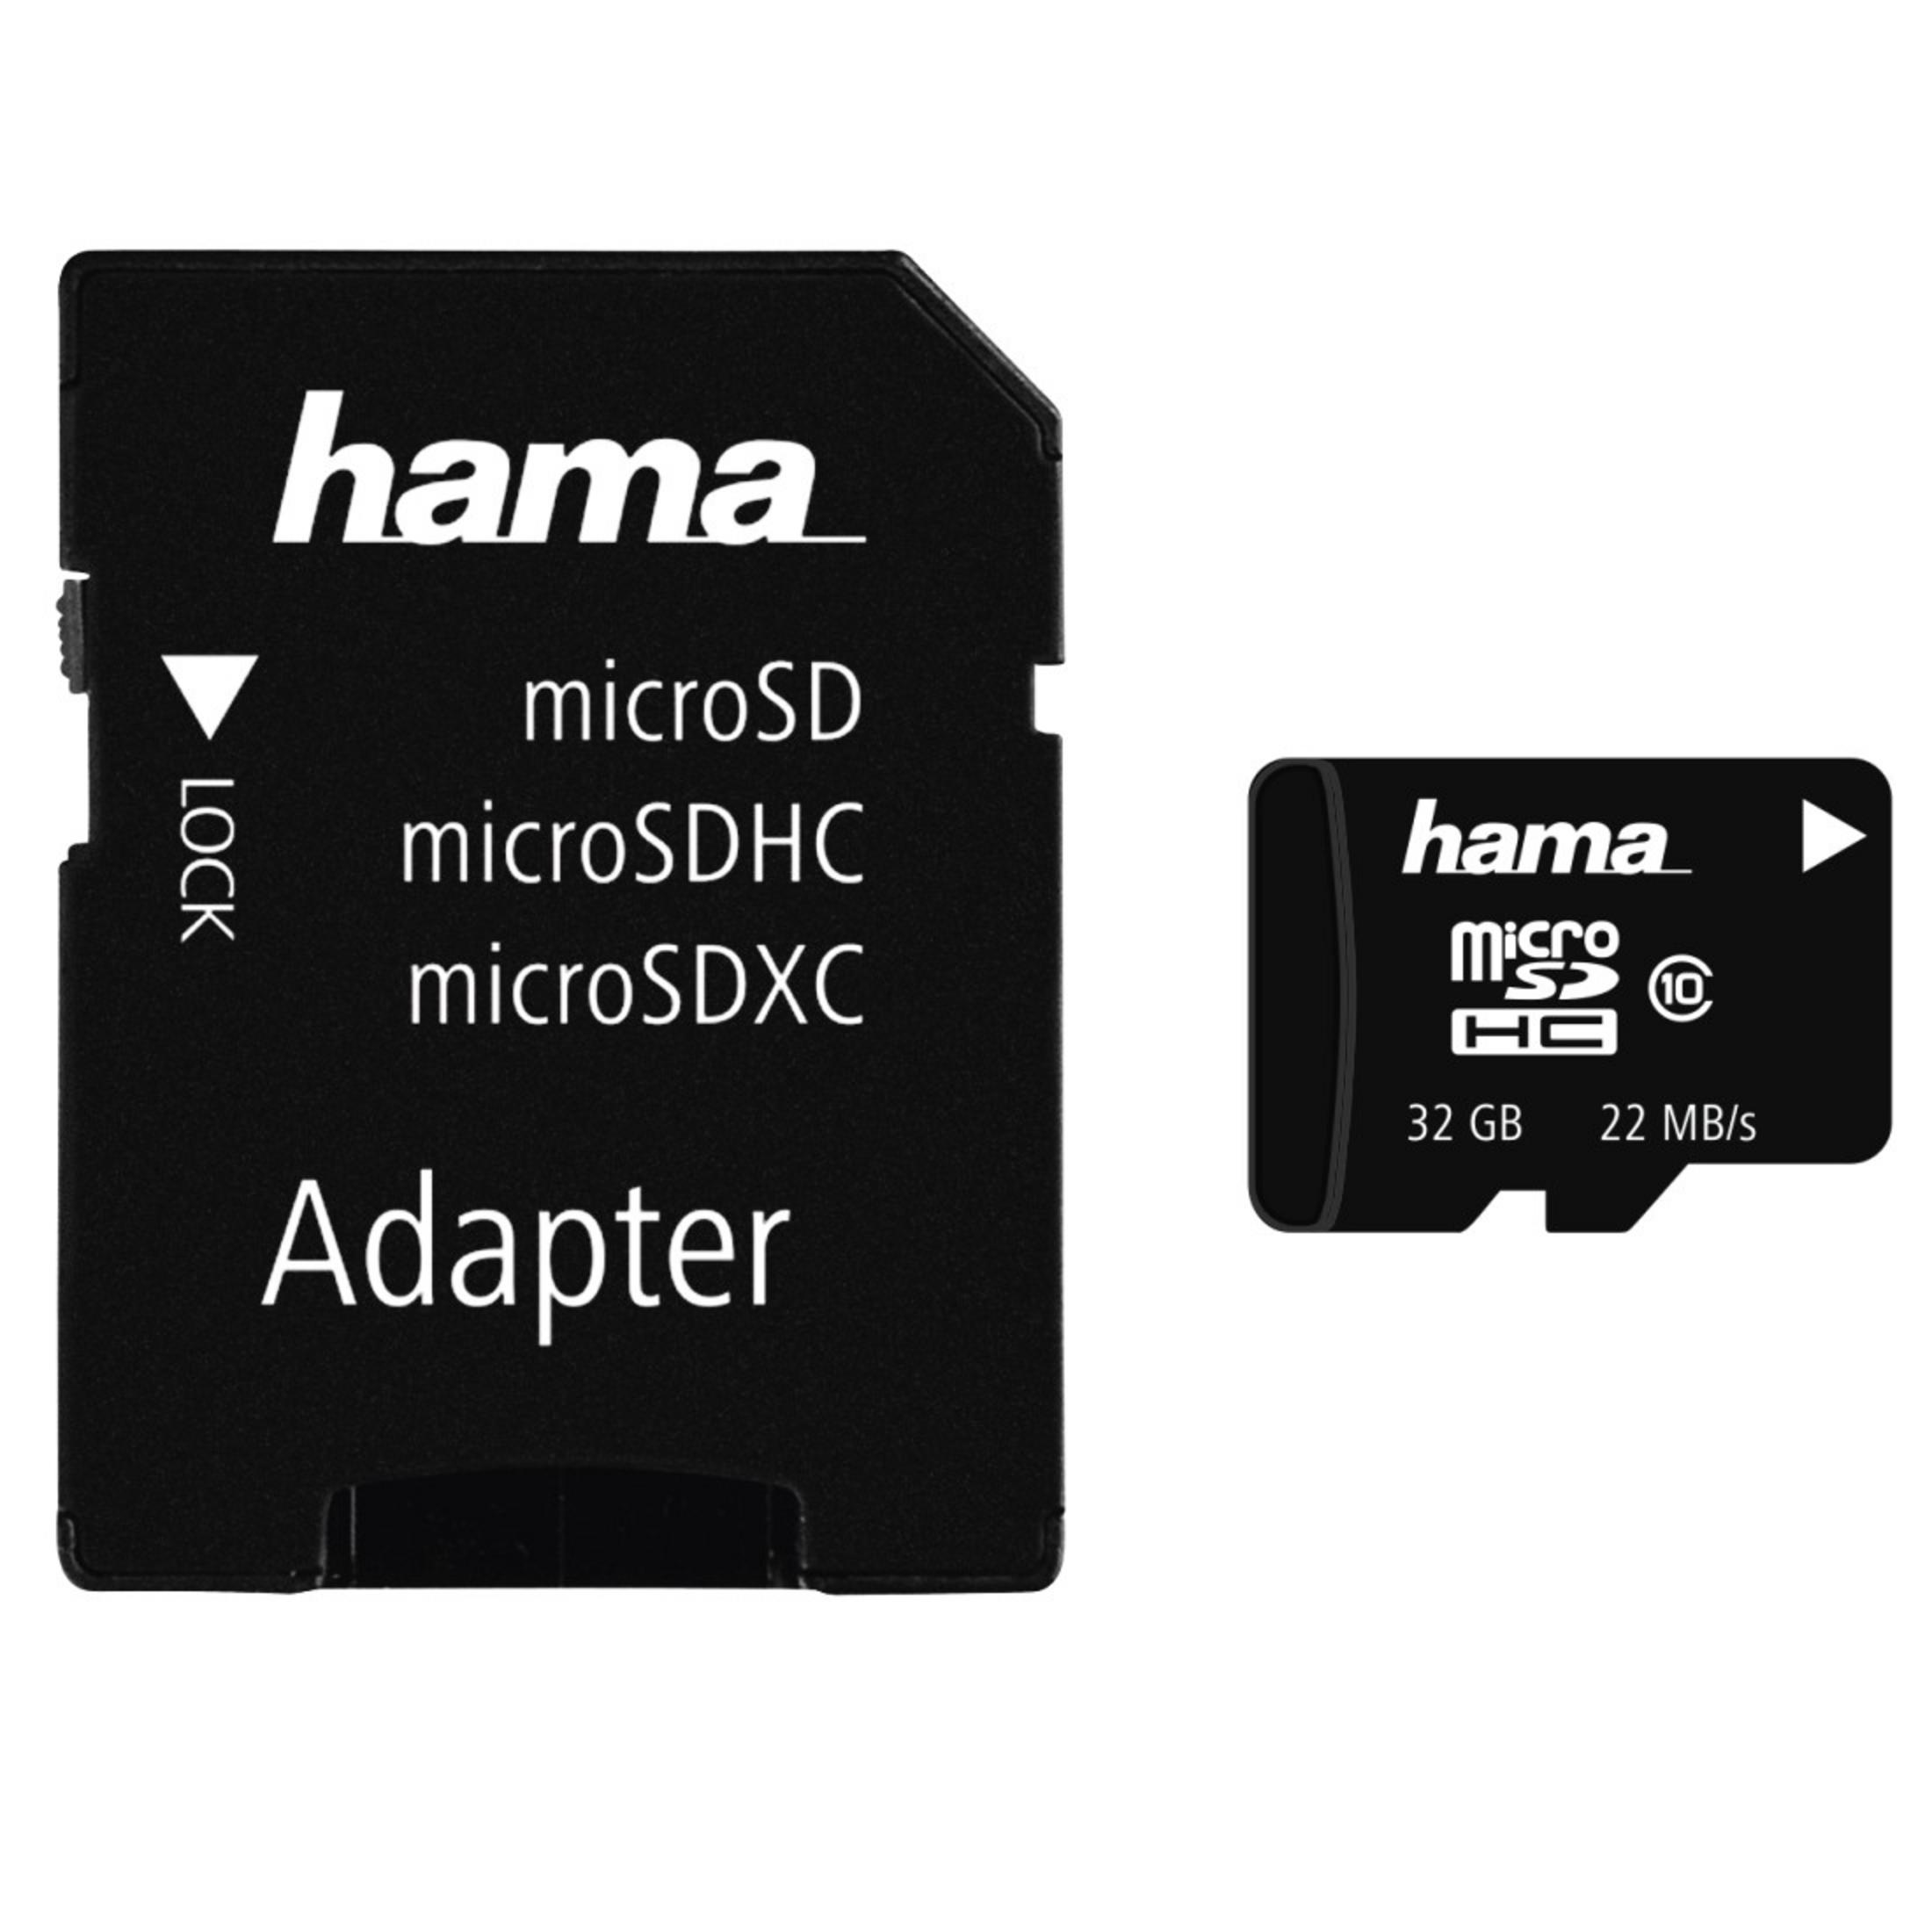 22MB/S +A/F, 32GB Micro-SDHC 22 MB/s 108089 GB, 32 MSDHC Speicherkarte, HAMA C10